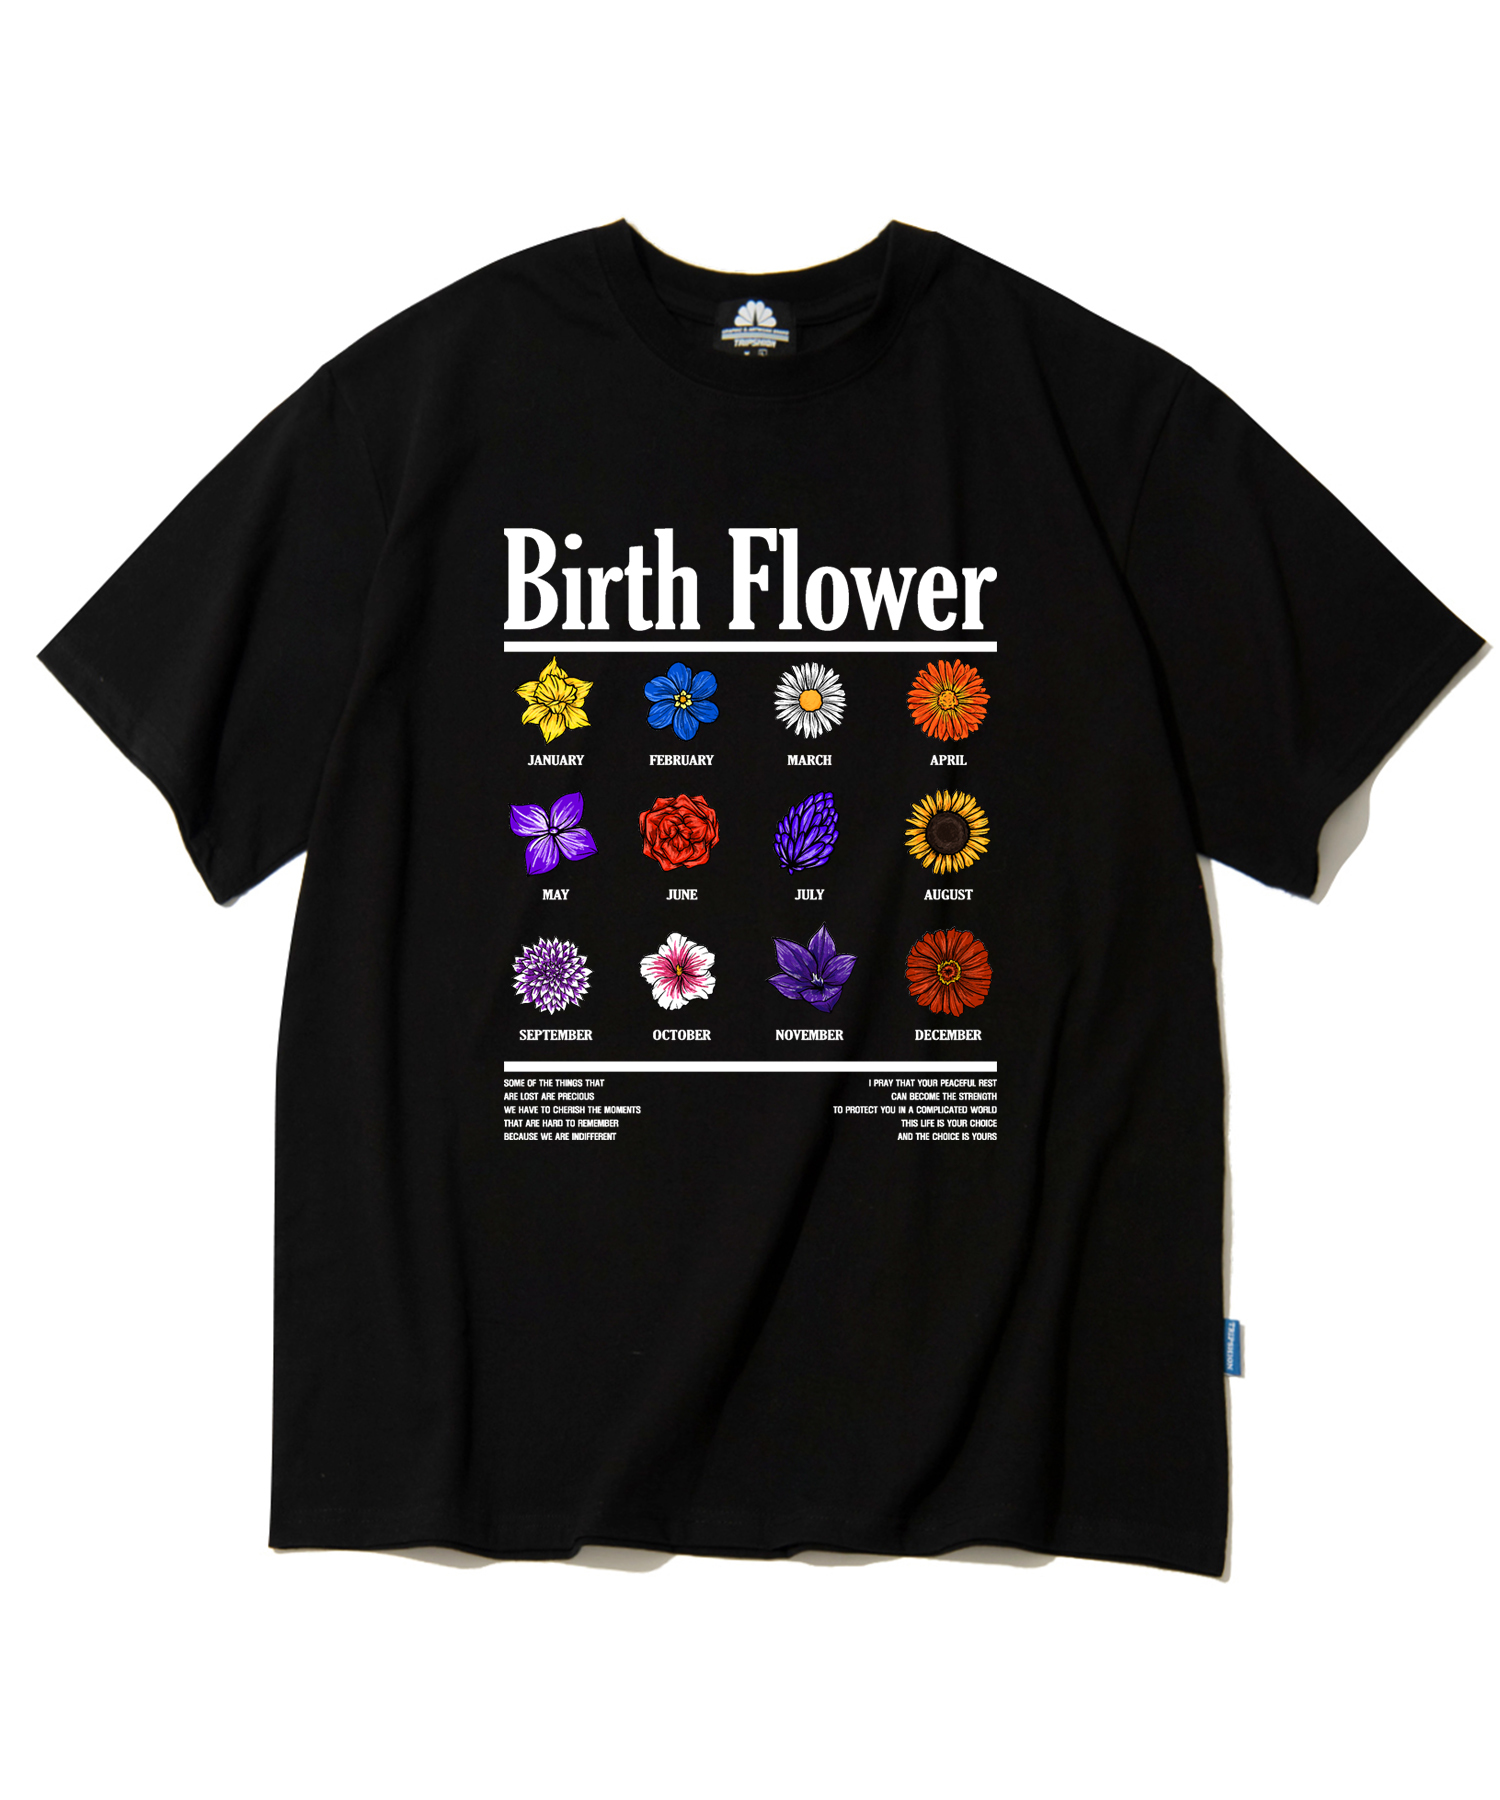 BIRTH FLOWER GRAPHIC T-SHIRTS - BLACK